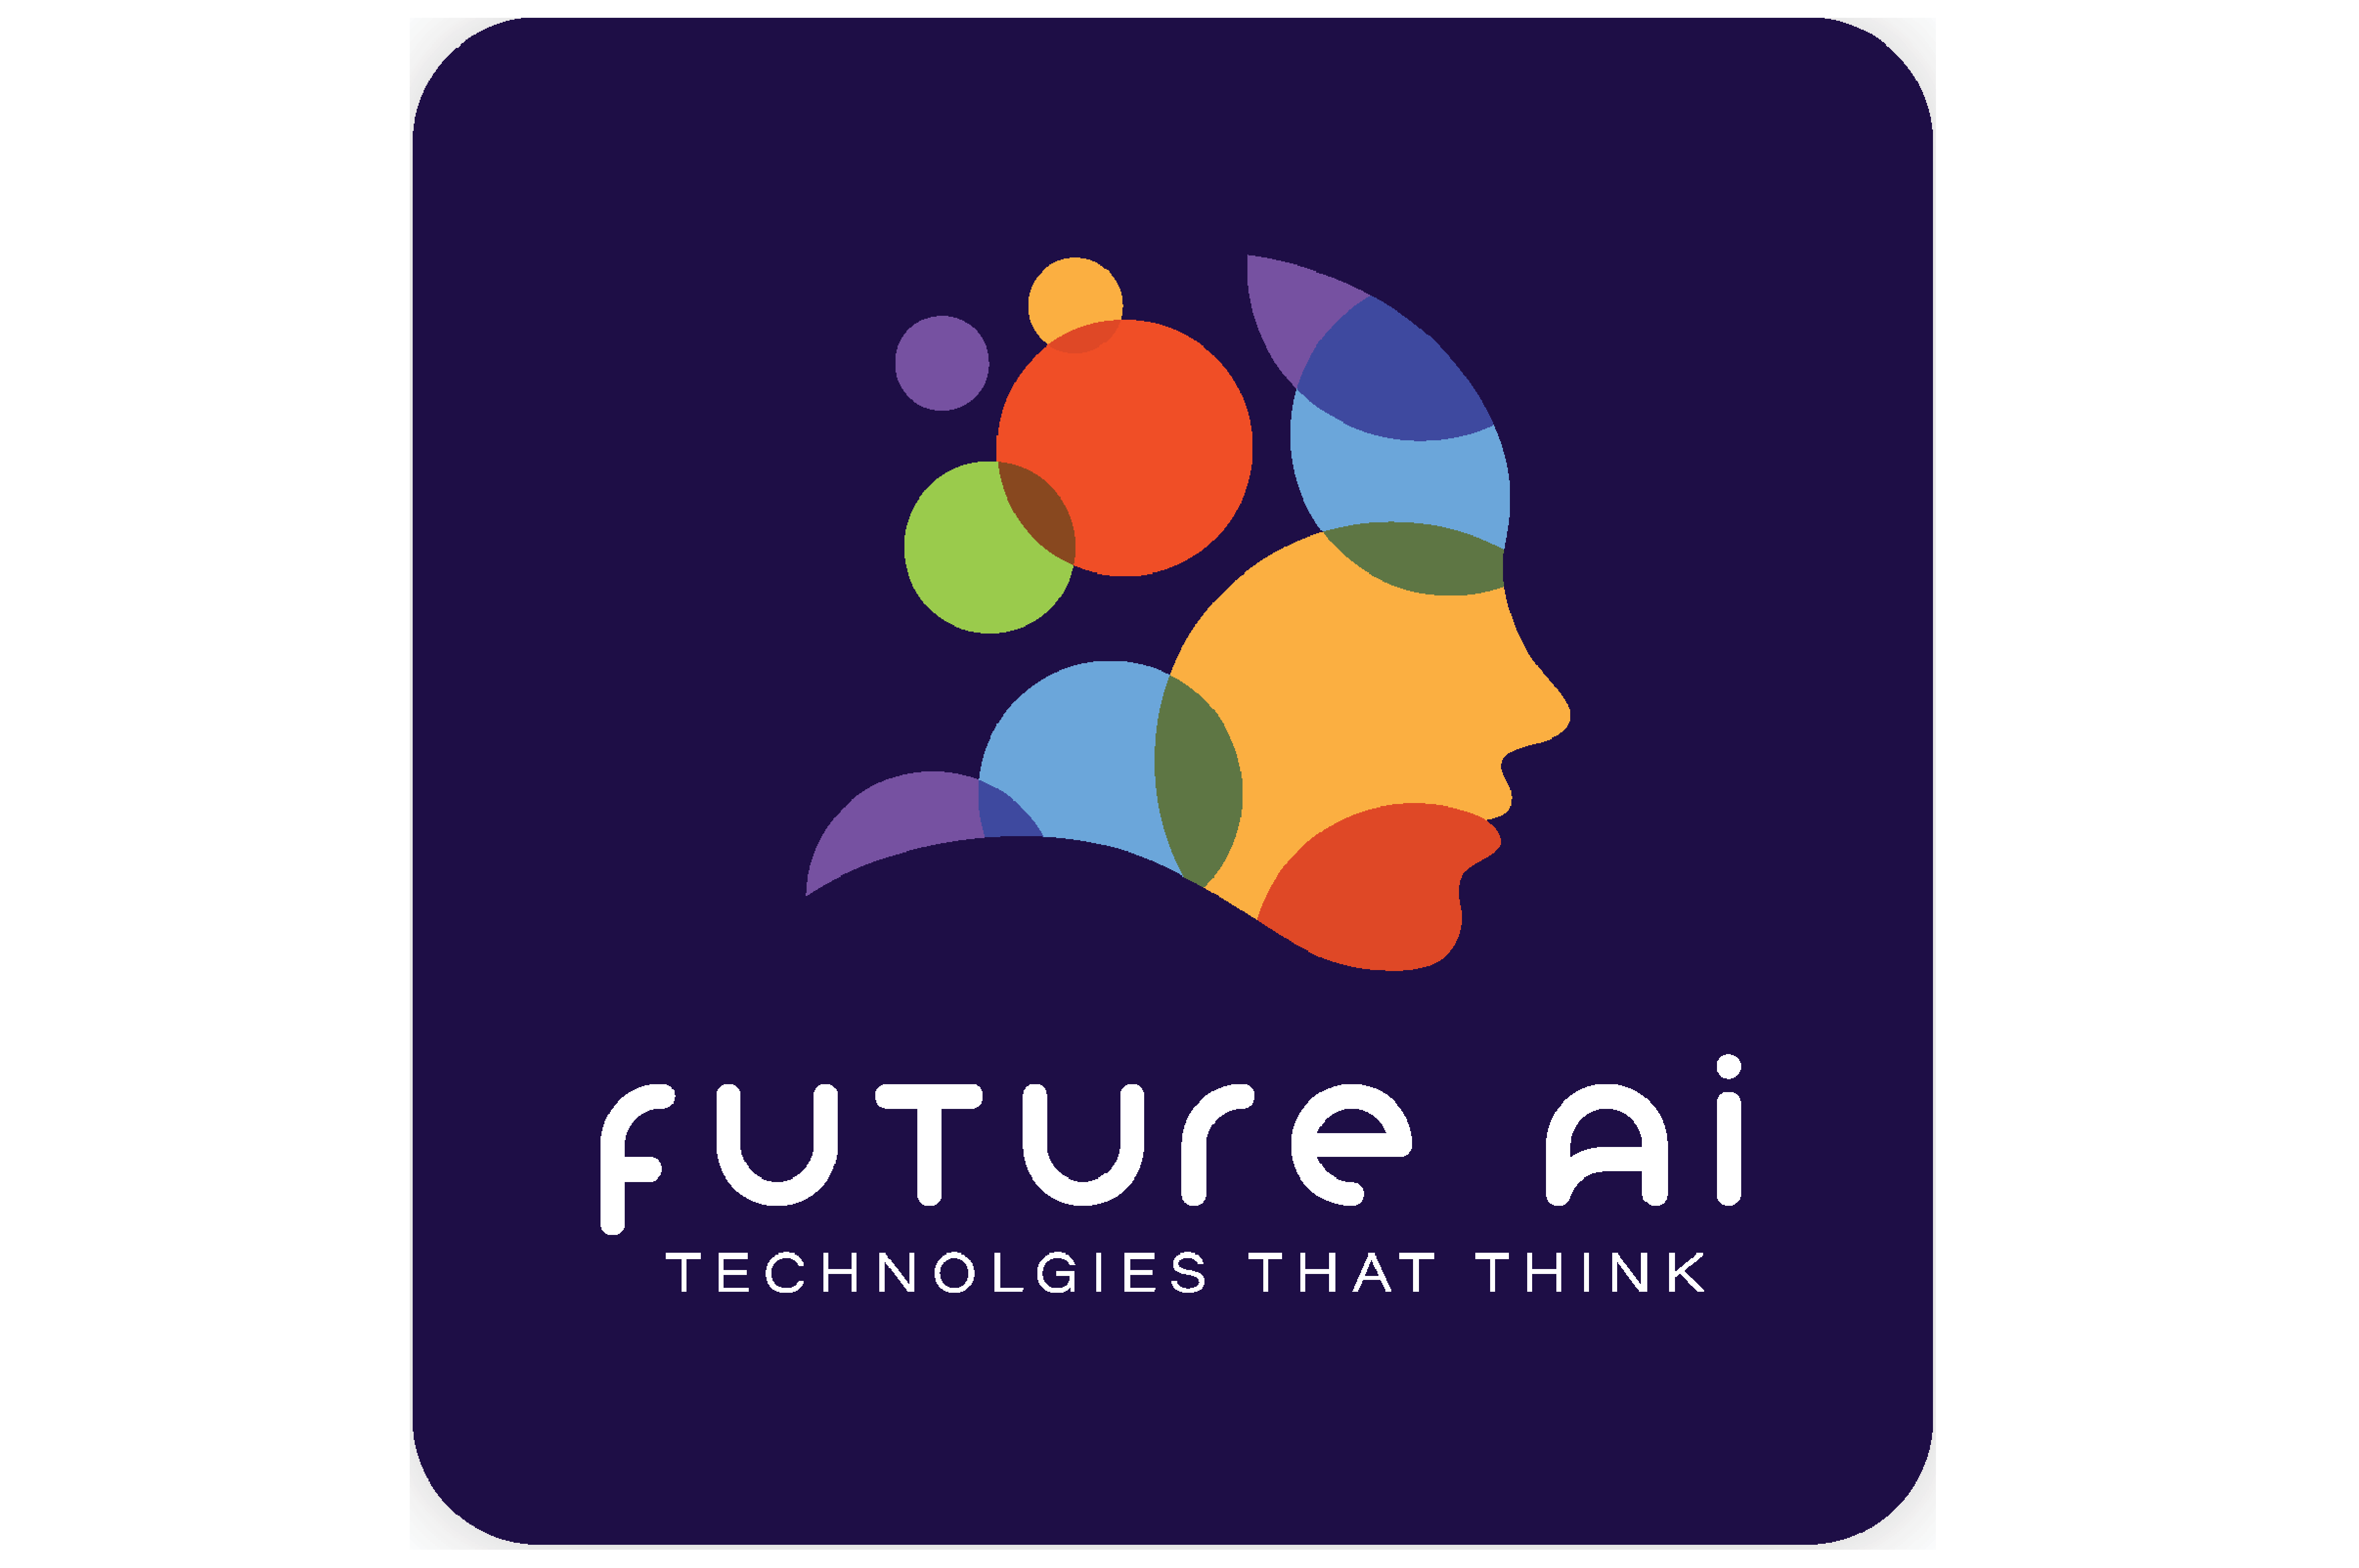 Future AI logo with tagline "technologies that think"